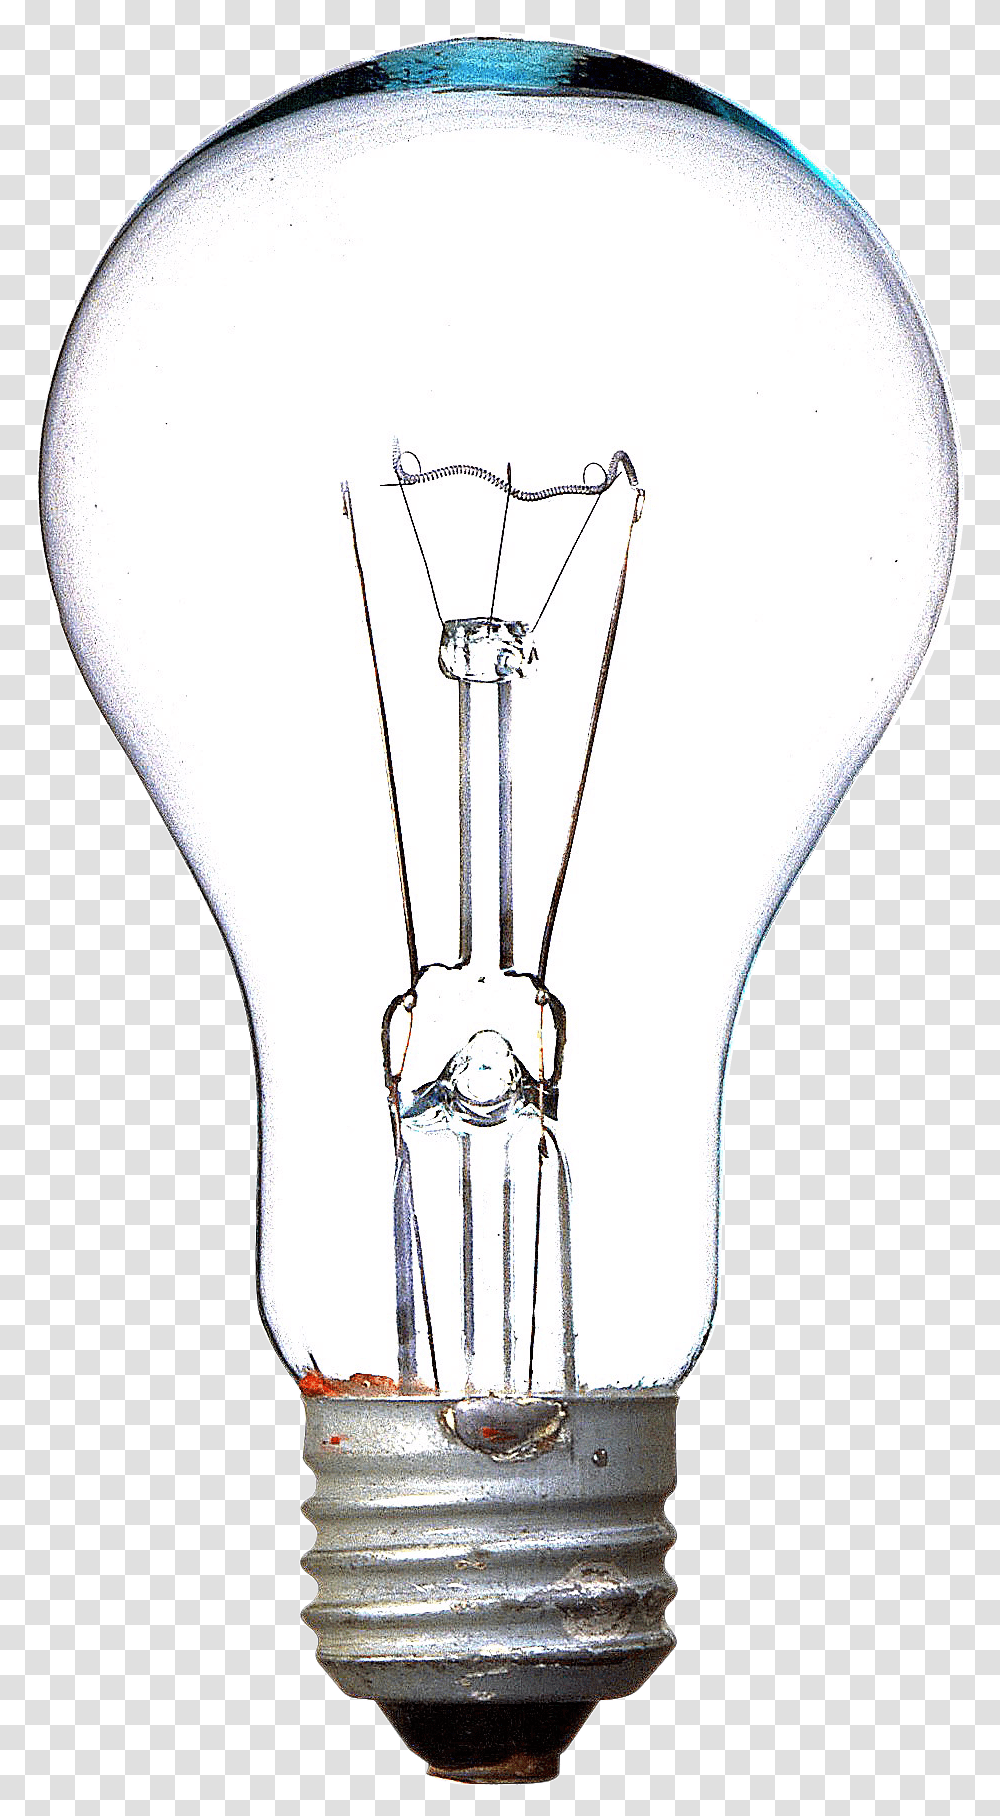 Incandescent Light Bulb Lamp Icon Lamp Image Incandescent Light Bulb, Lightbulb Transparent Png